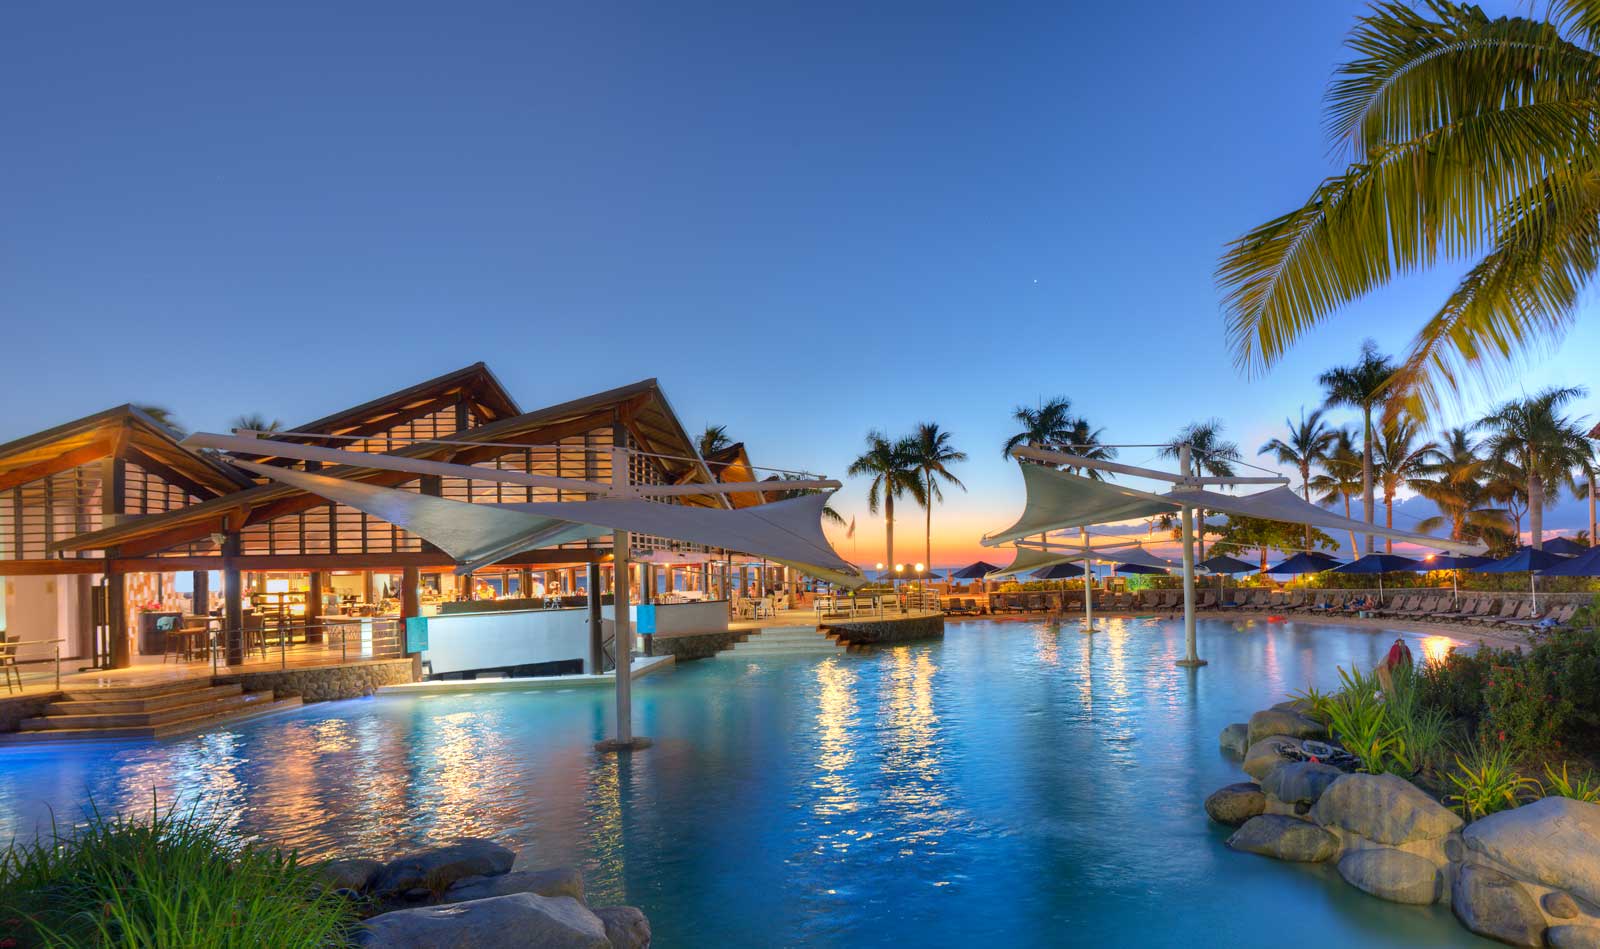 Radisson Blu Fiji pool